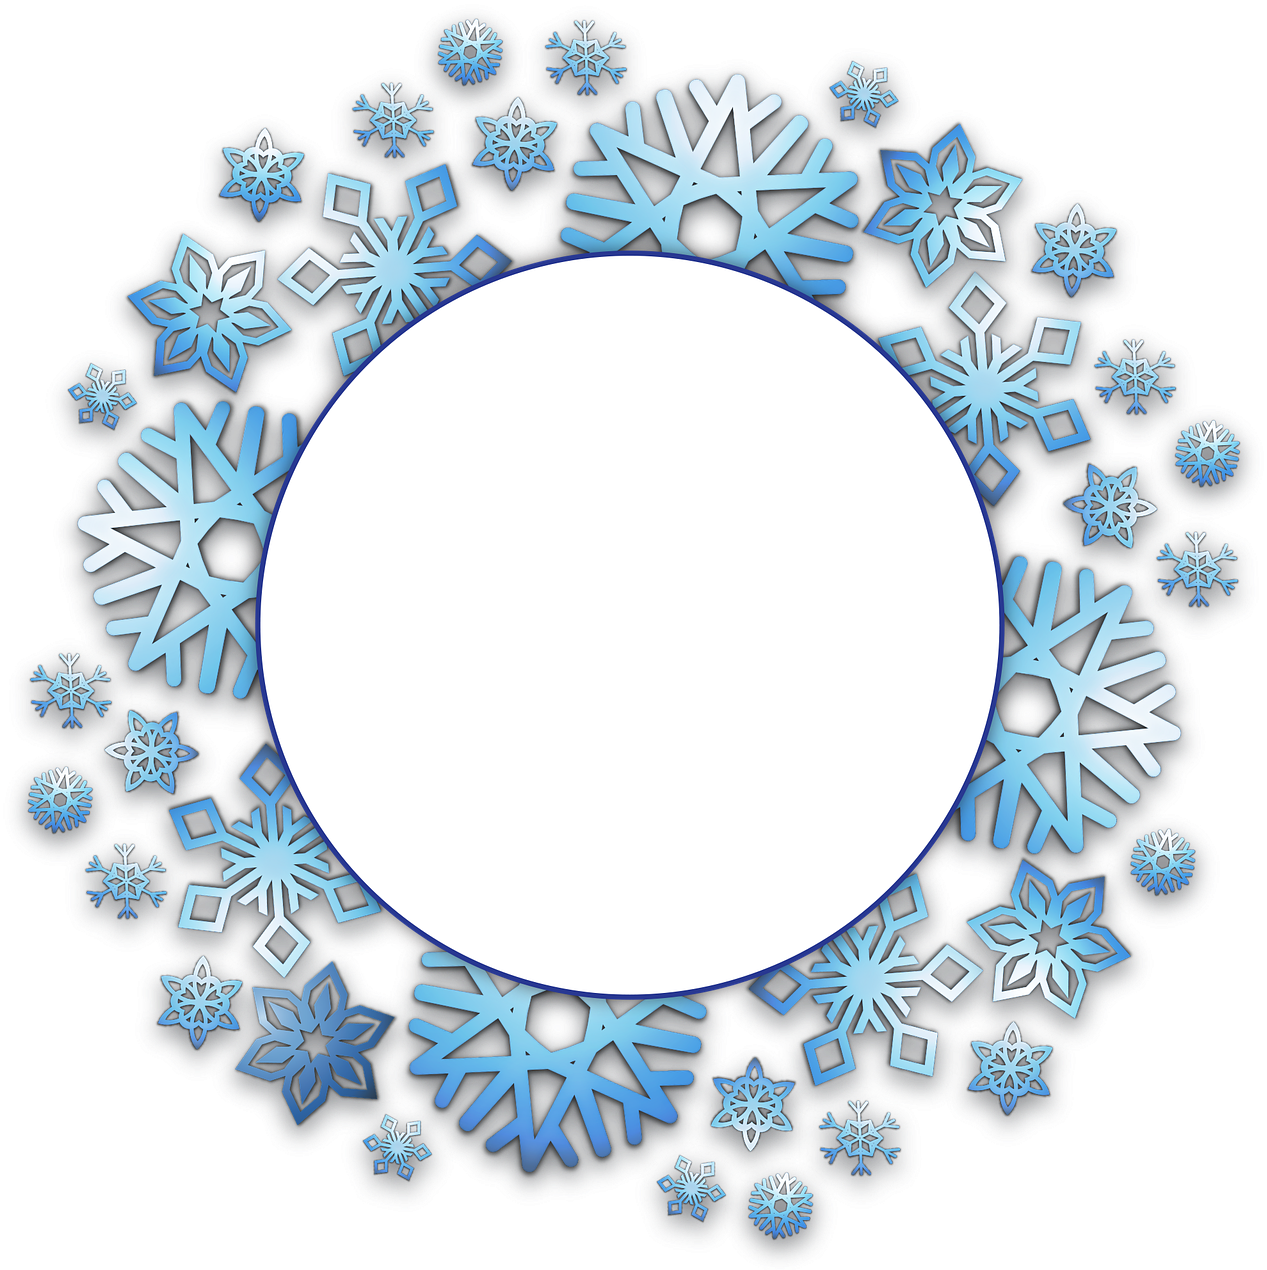 A White Circle With Blue Snowflakes Around It